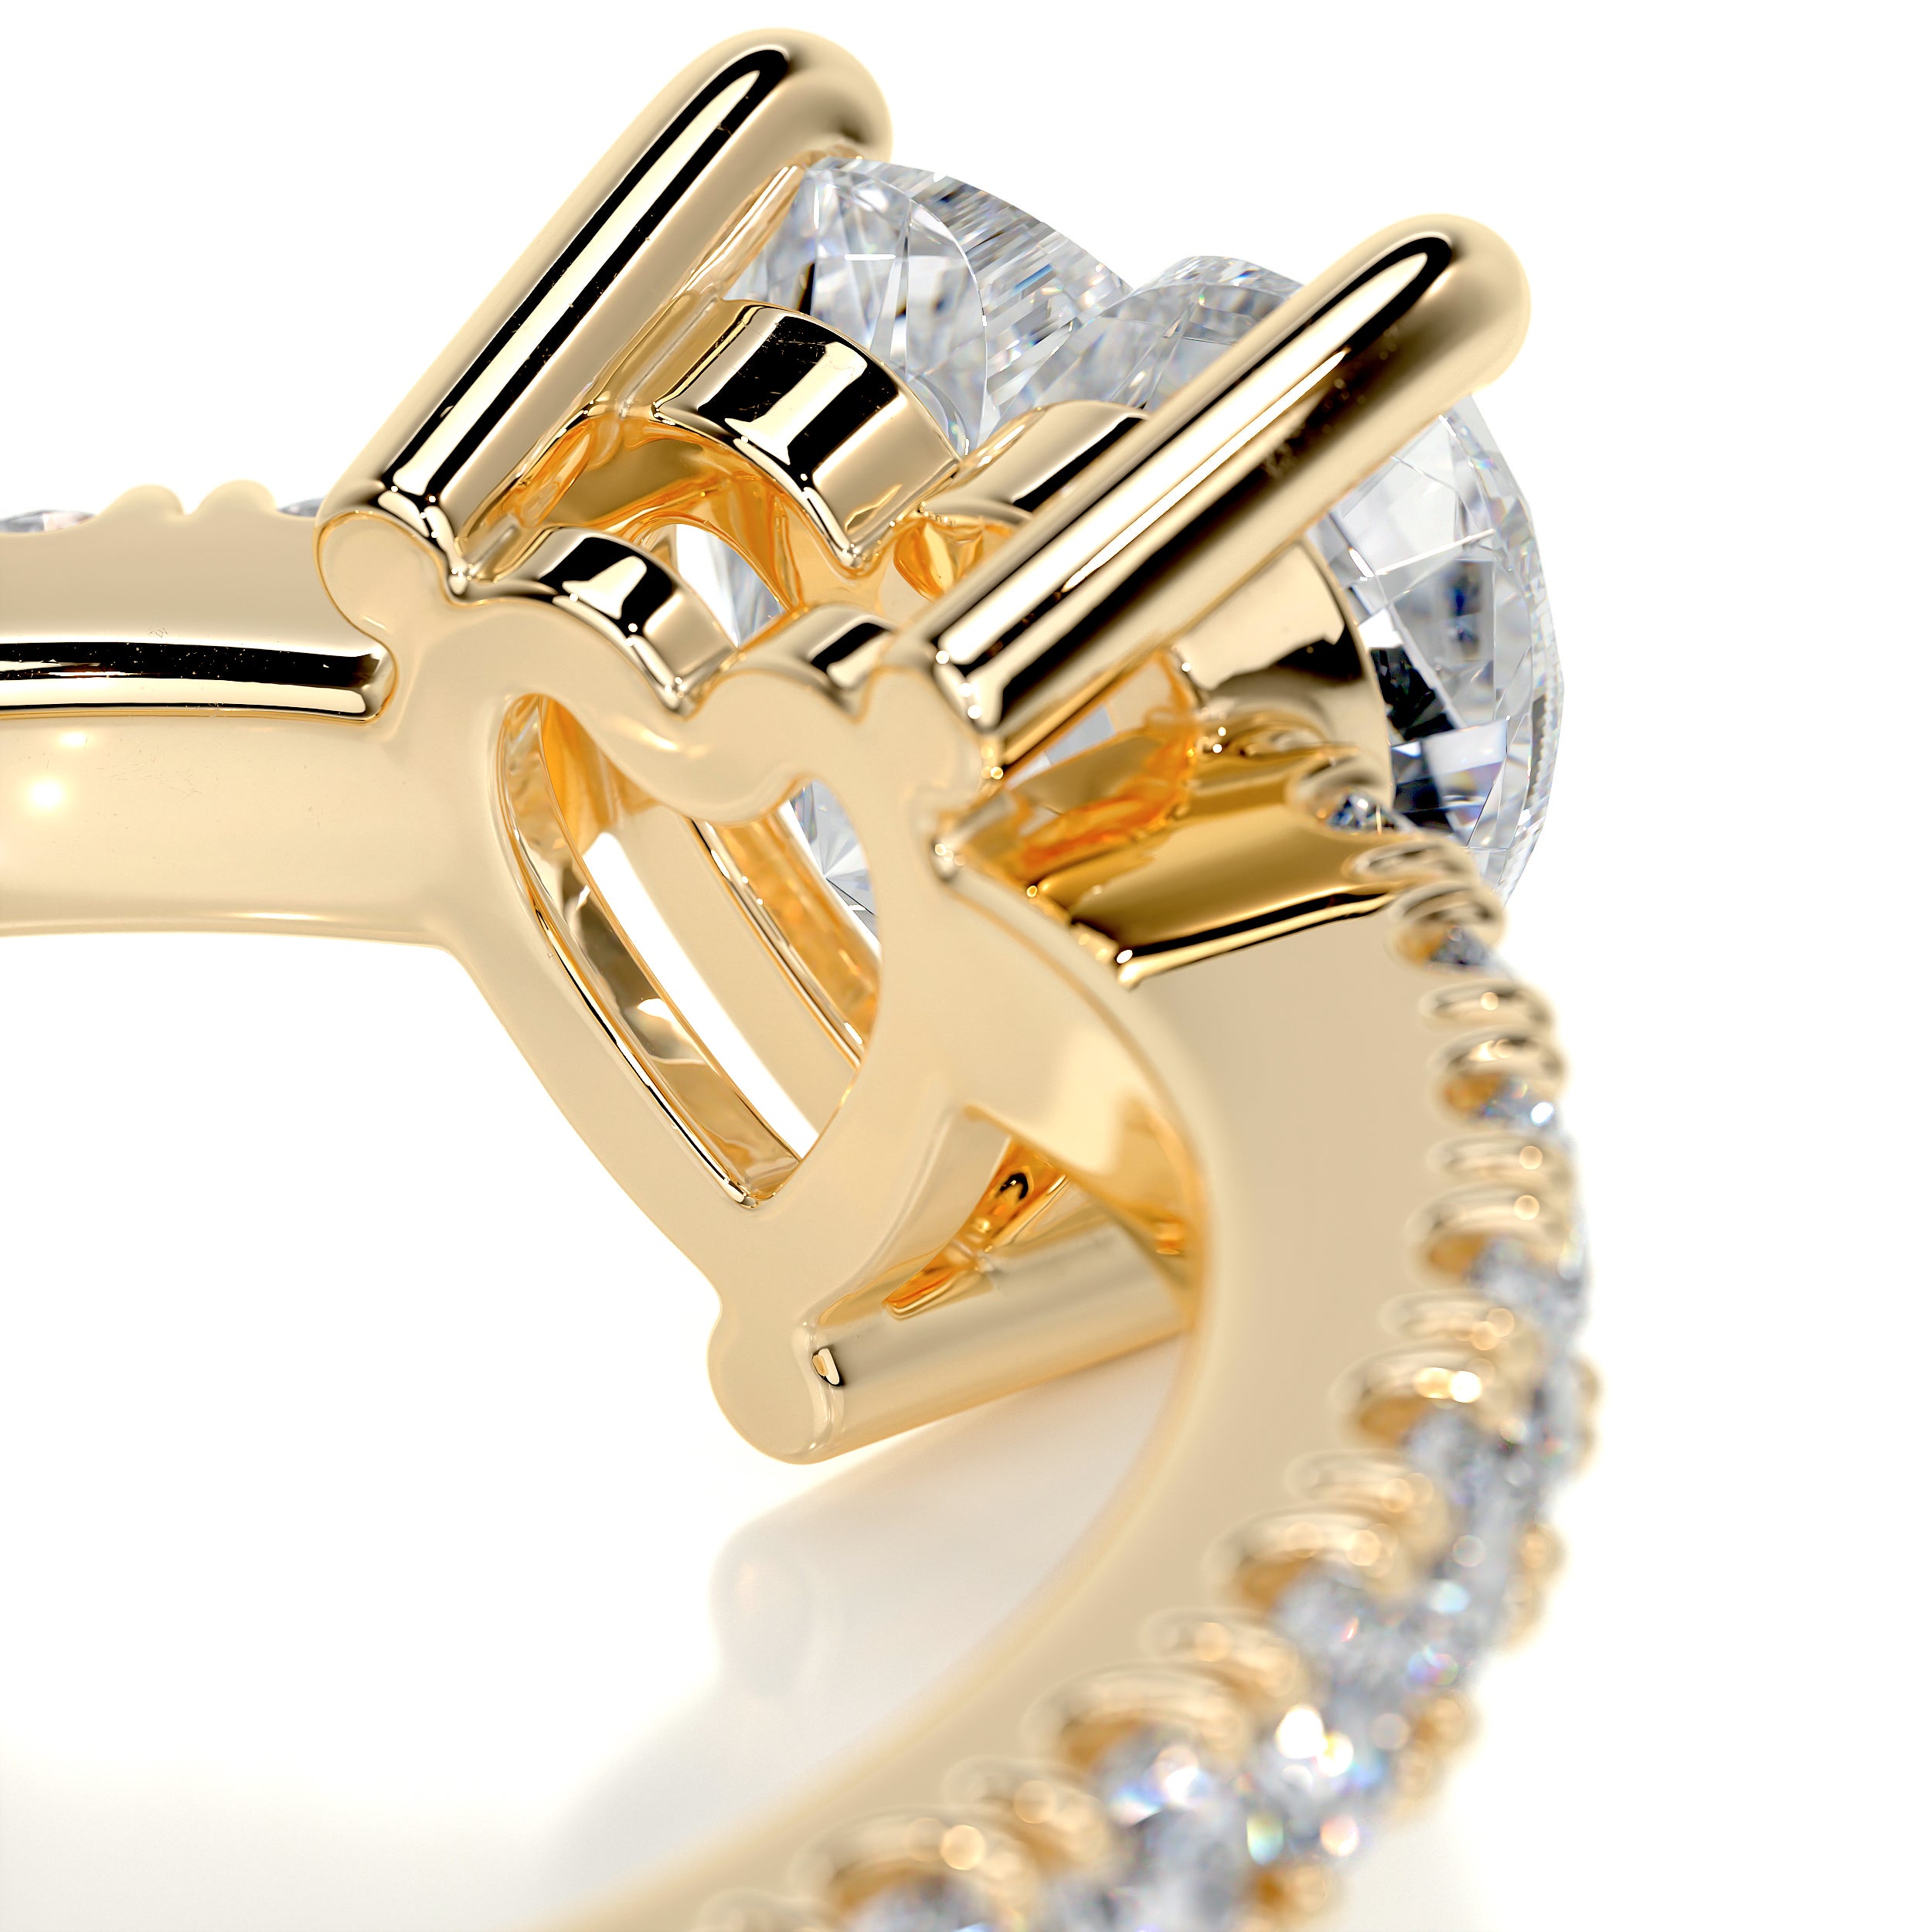 Audrey Diamond Engagement Ring   (1.3 Carat) -18K Yellow Gold